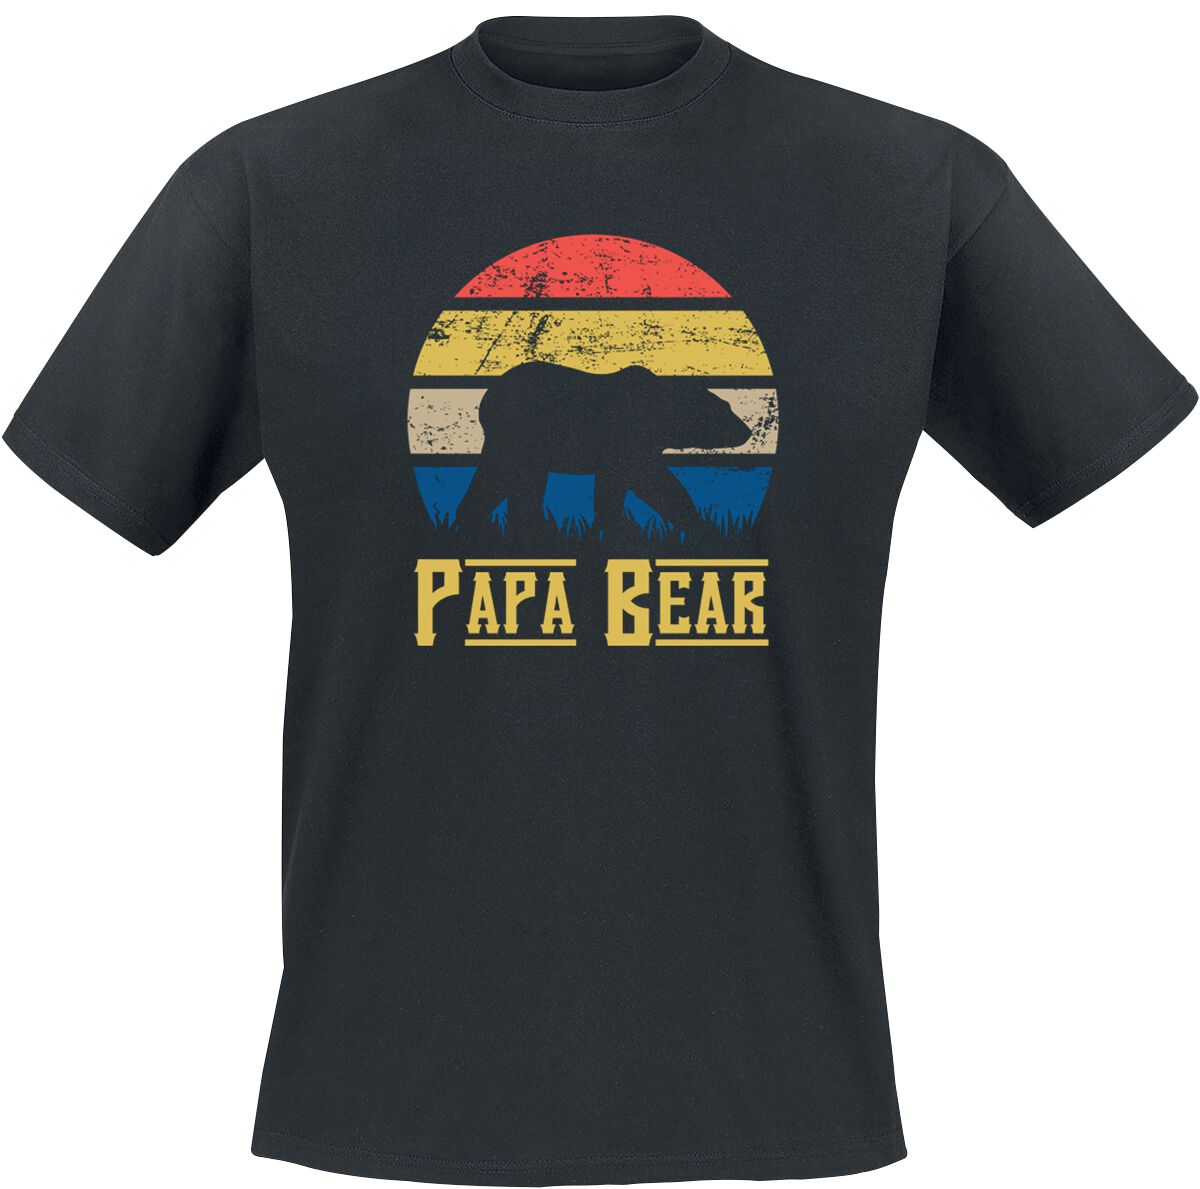 Familie & Freunde Papa Bear T-Shirt schwarz in L